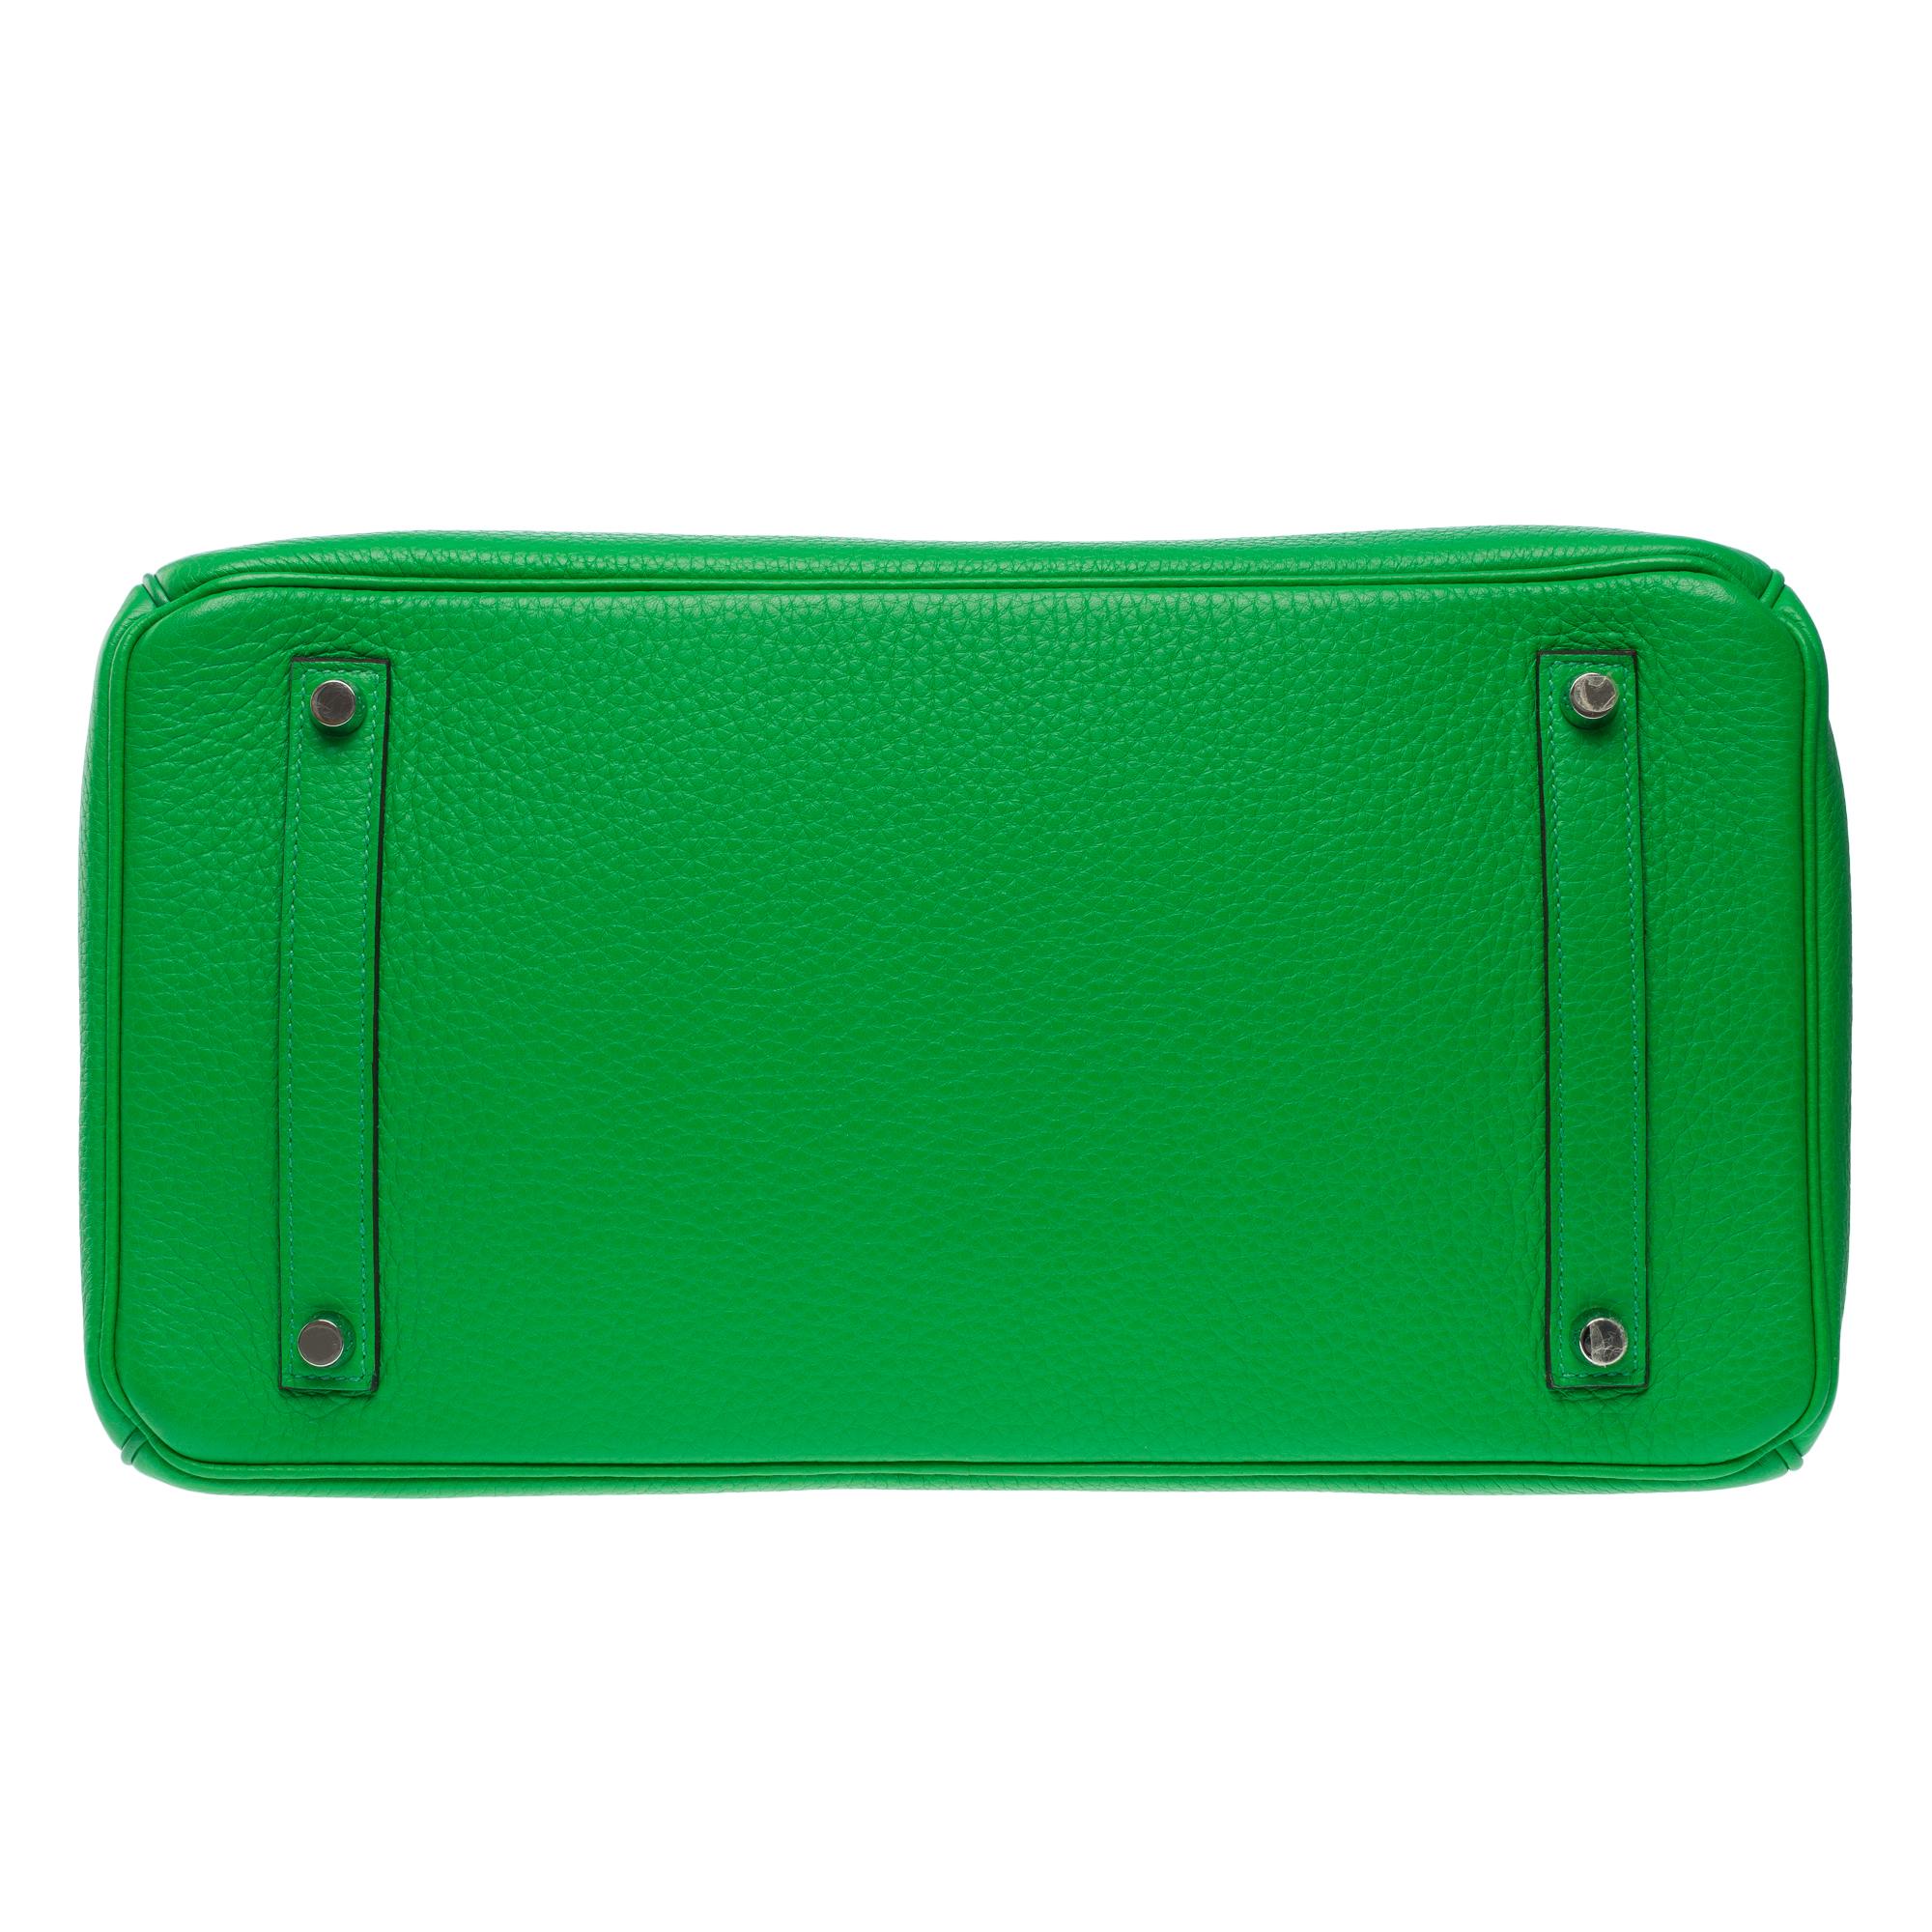 Fantastic Hermès Birkin 35 handbag in Green Bamboo Togo leather, SHW 7